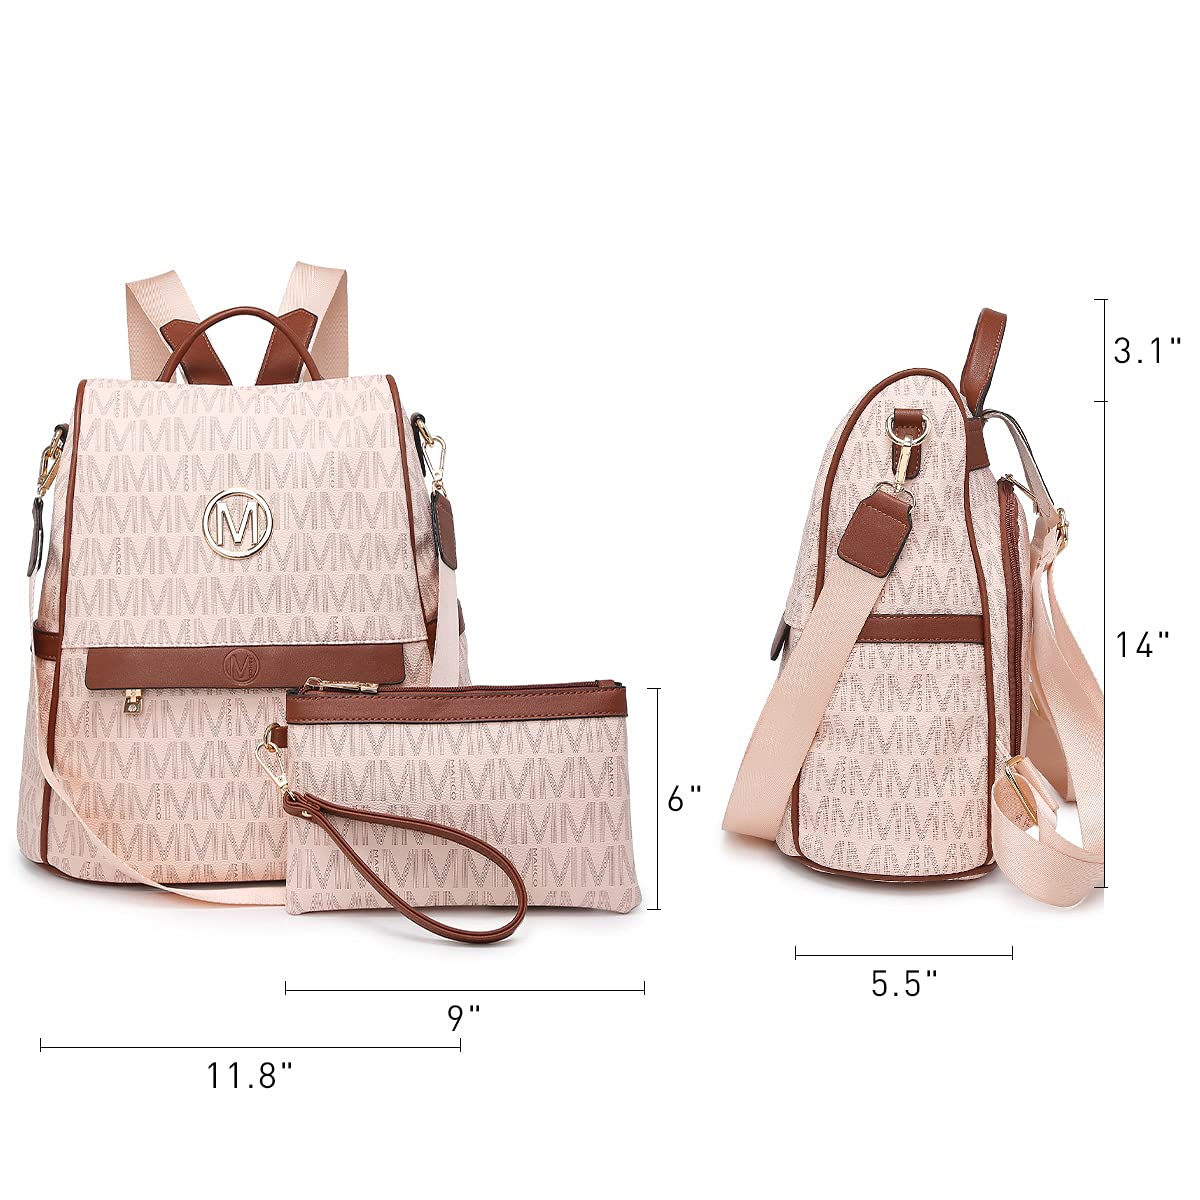 MKP Women Fashion Backpack Purse Multi Pockets Signature Anti-Theft Rucksack Travel School Shoulder Bag Handbag Wristlet